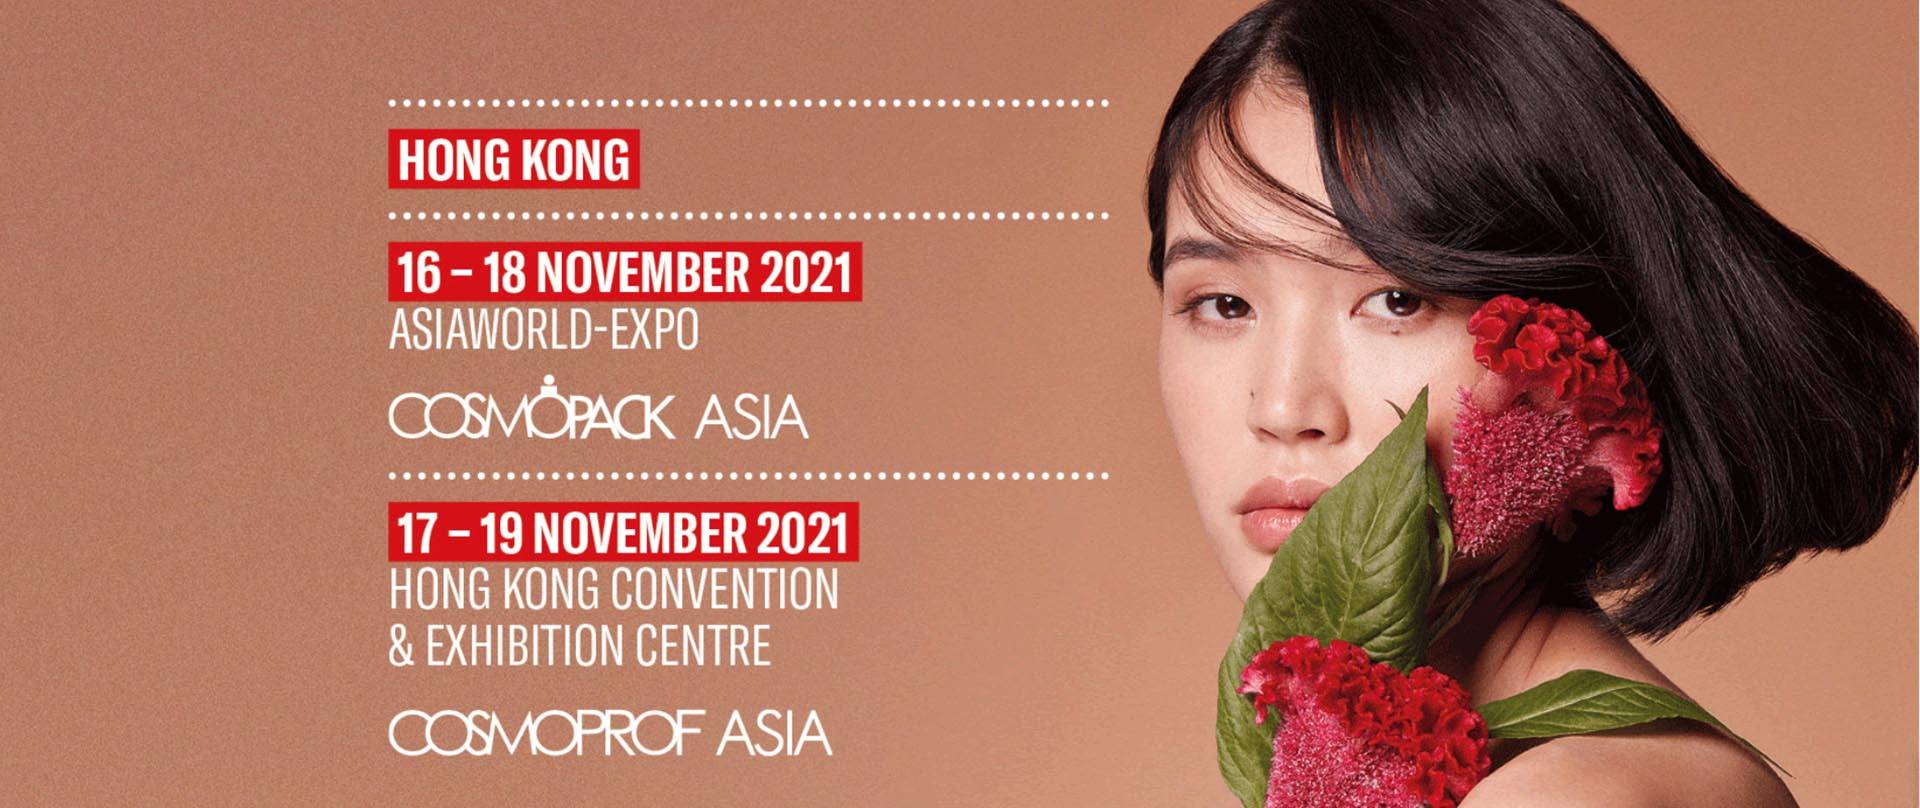 Cosmoprof-Asia i Hongkong 2021